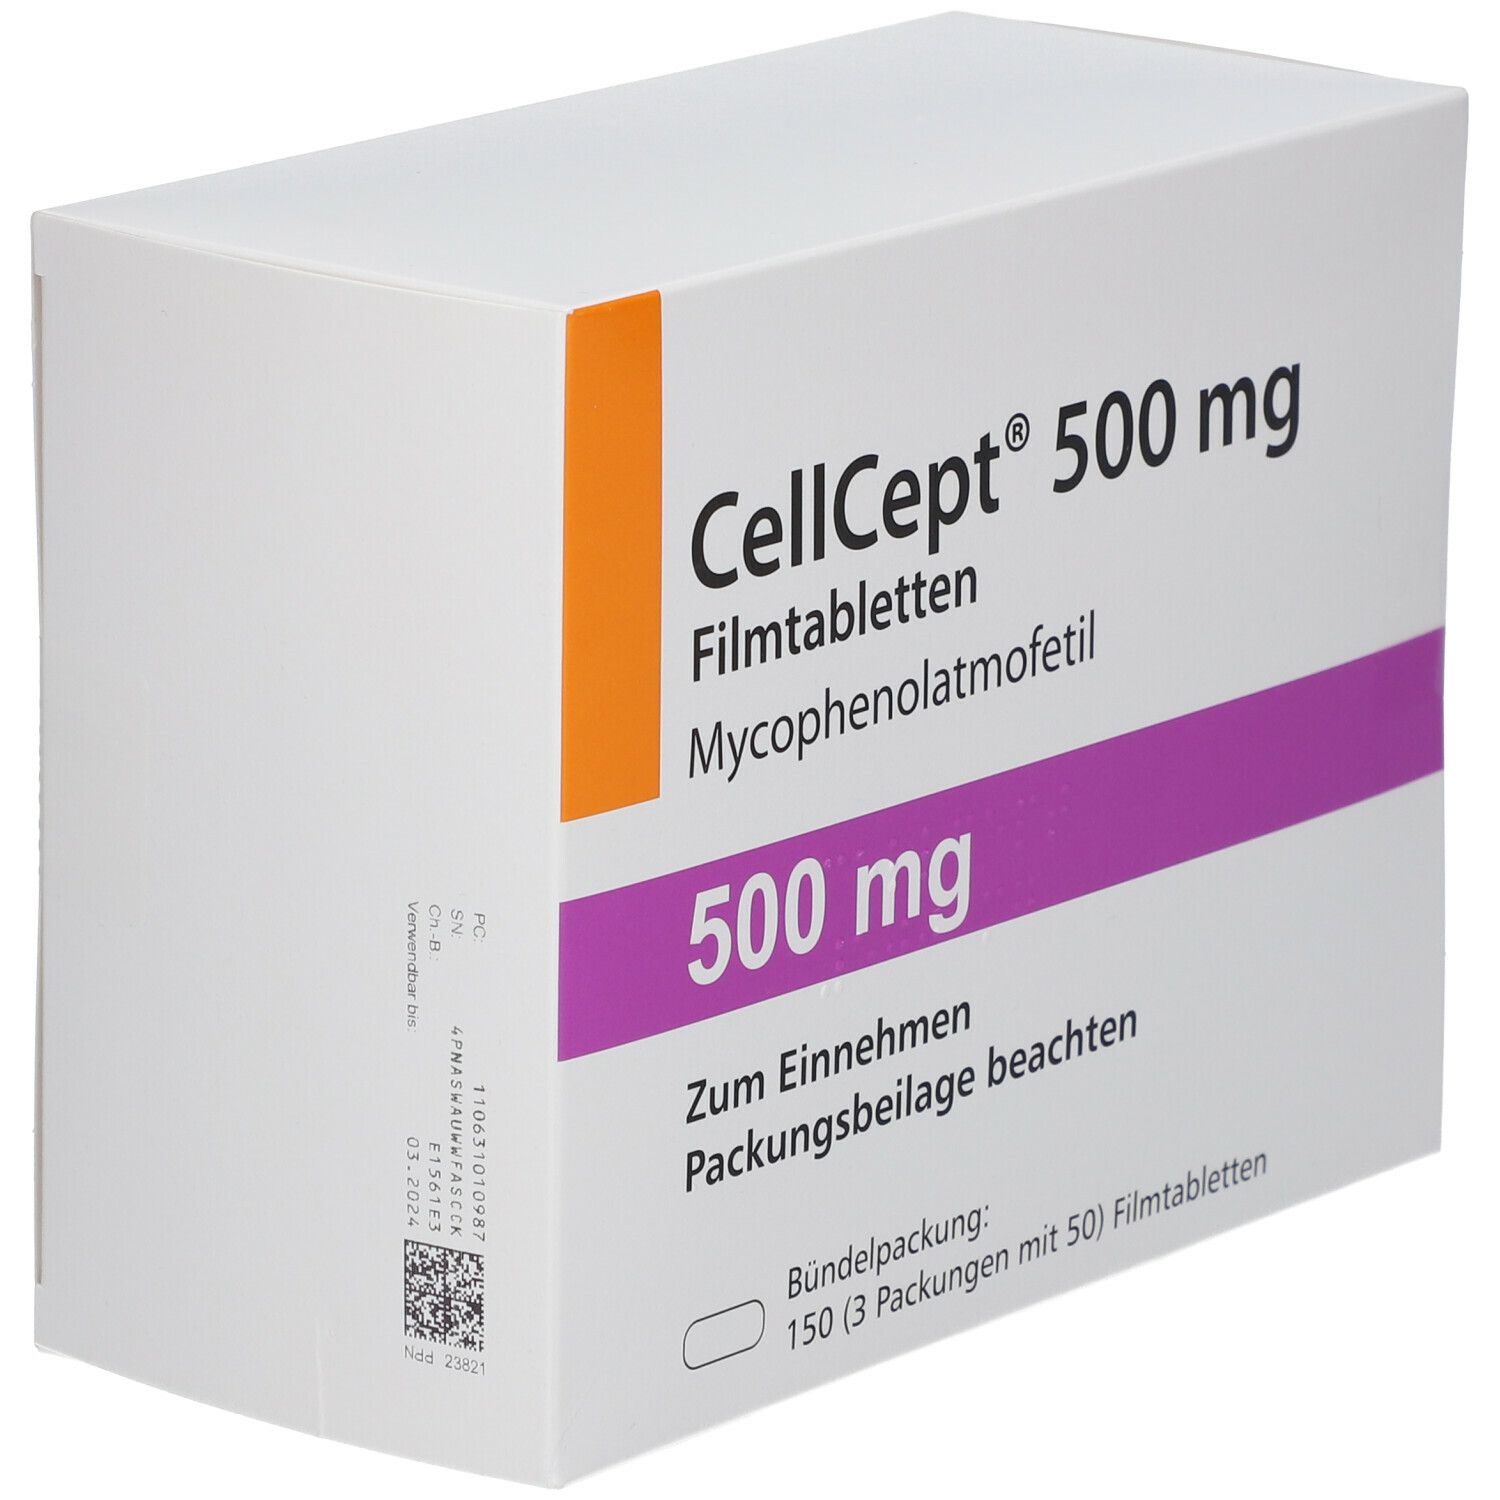 Cellcept 500 mg